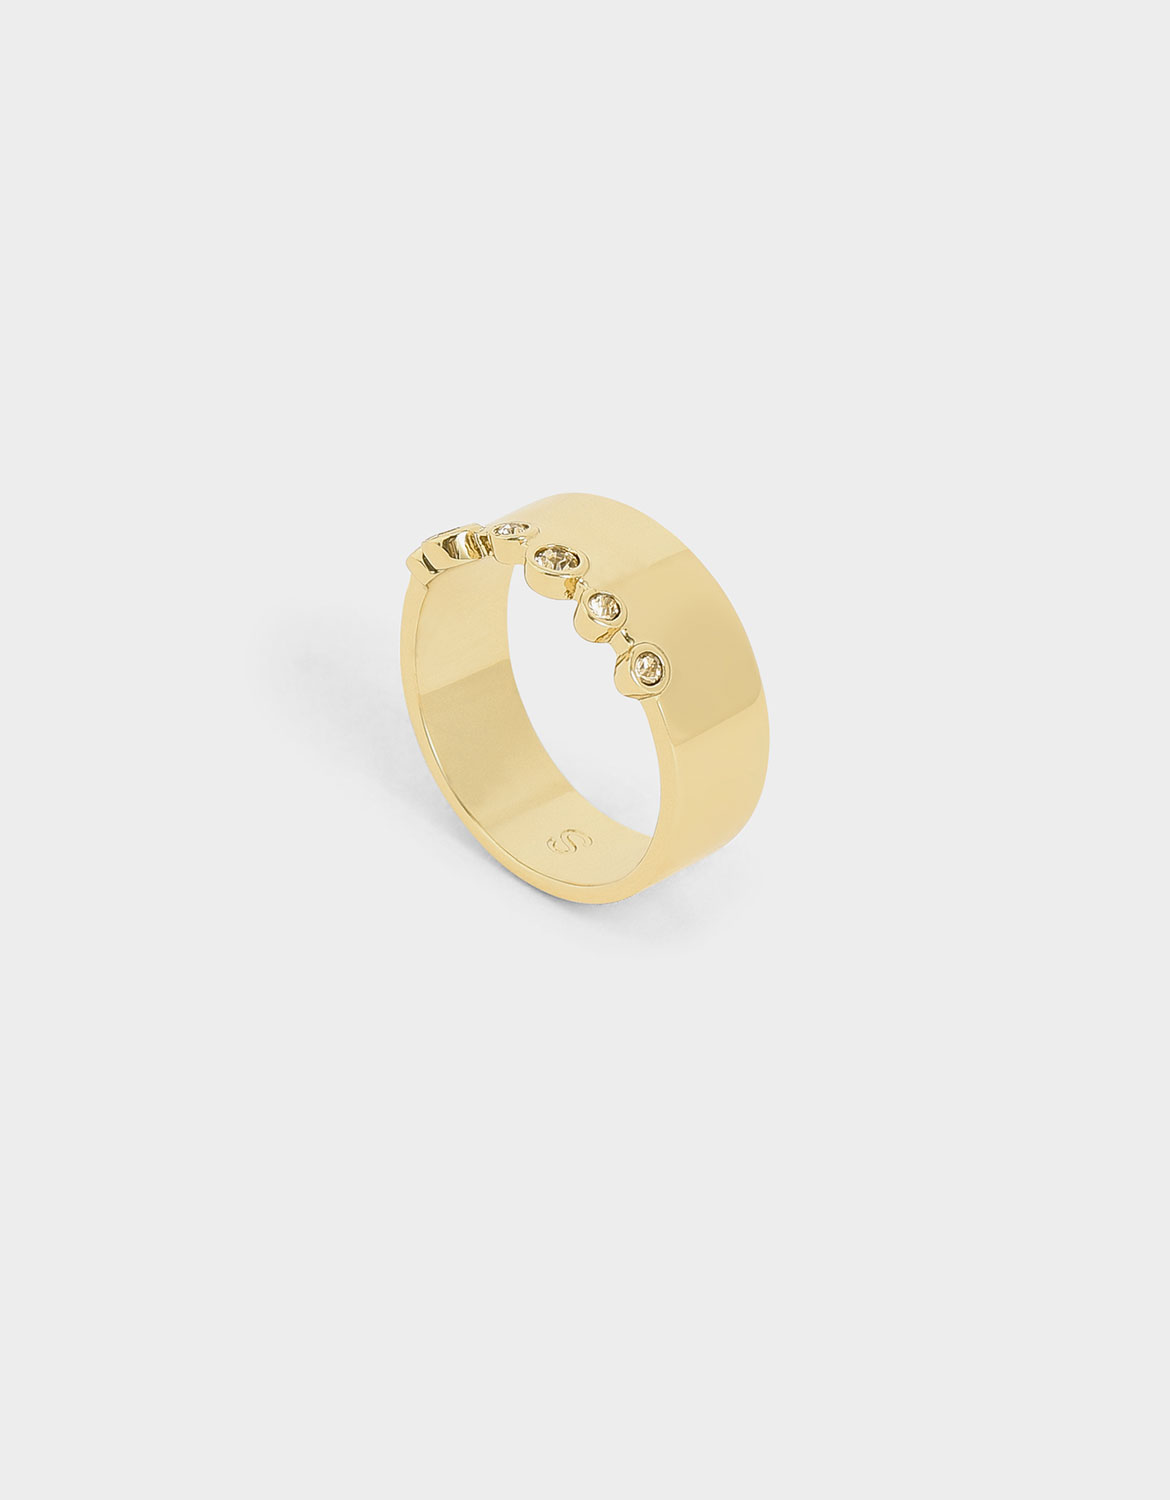 Swarovski(r) Crystal Studded Ring